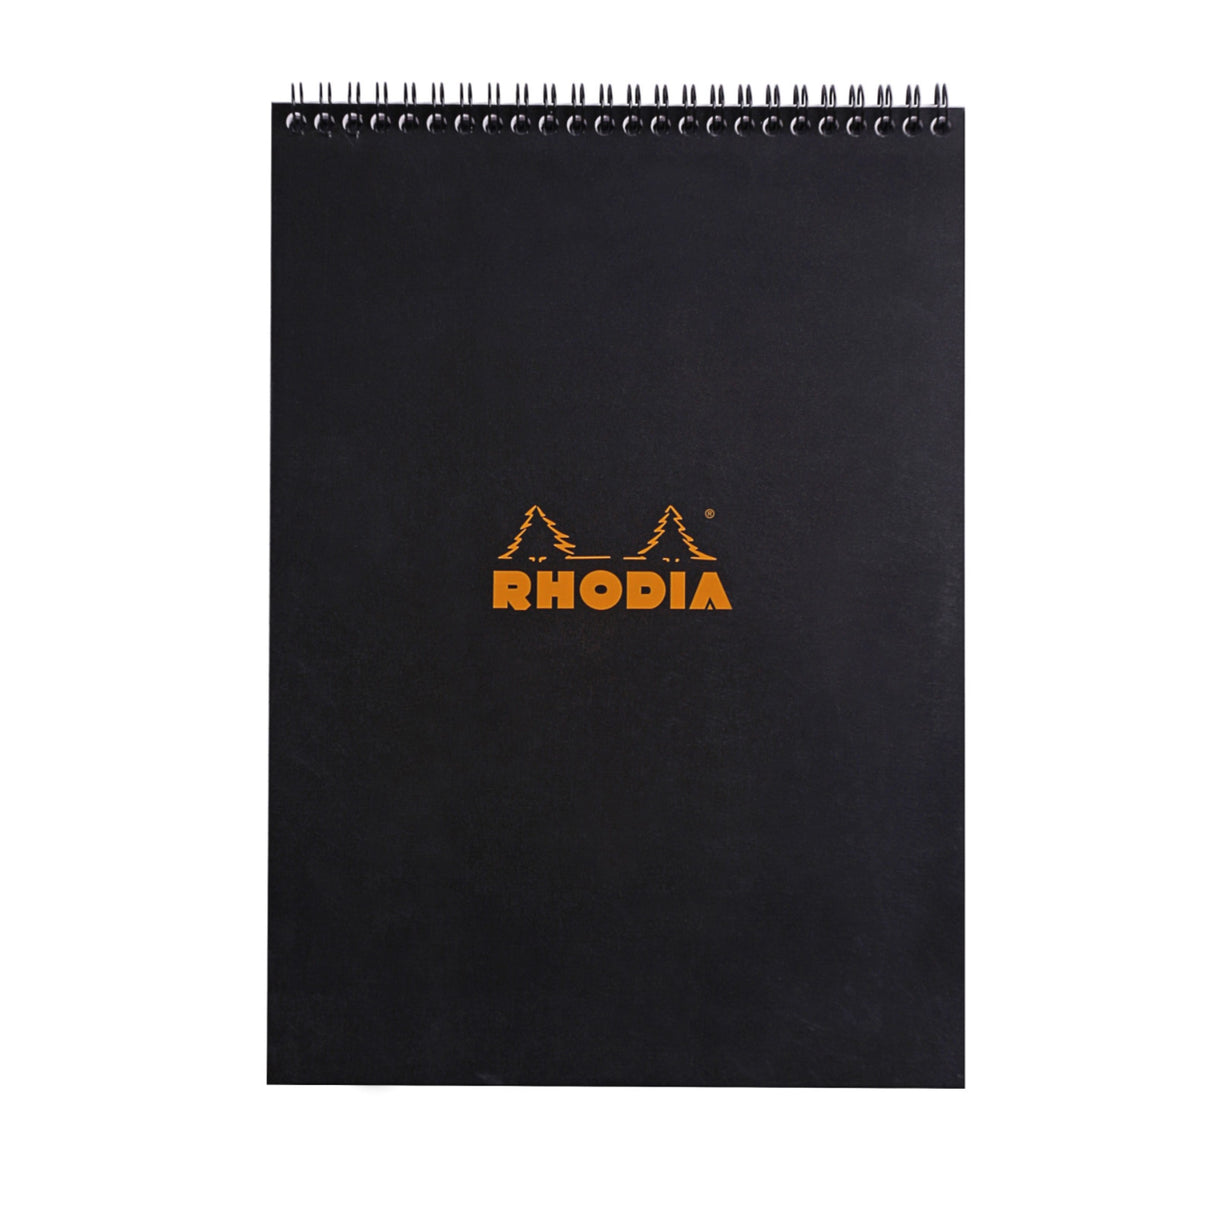 RHODIA BLACK CLASSIC LINED NOTEBOOK 21 X 29.7cm (8 1/4 X 11 3/4)